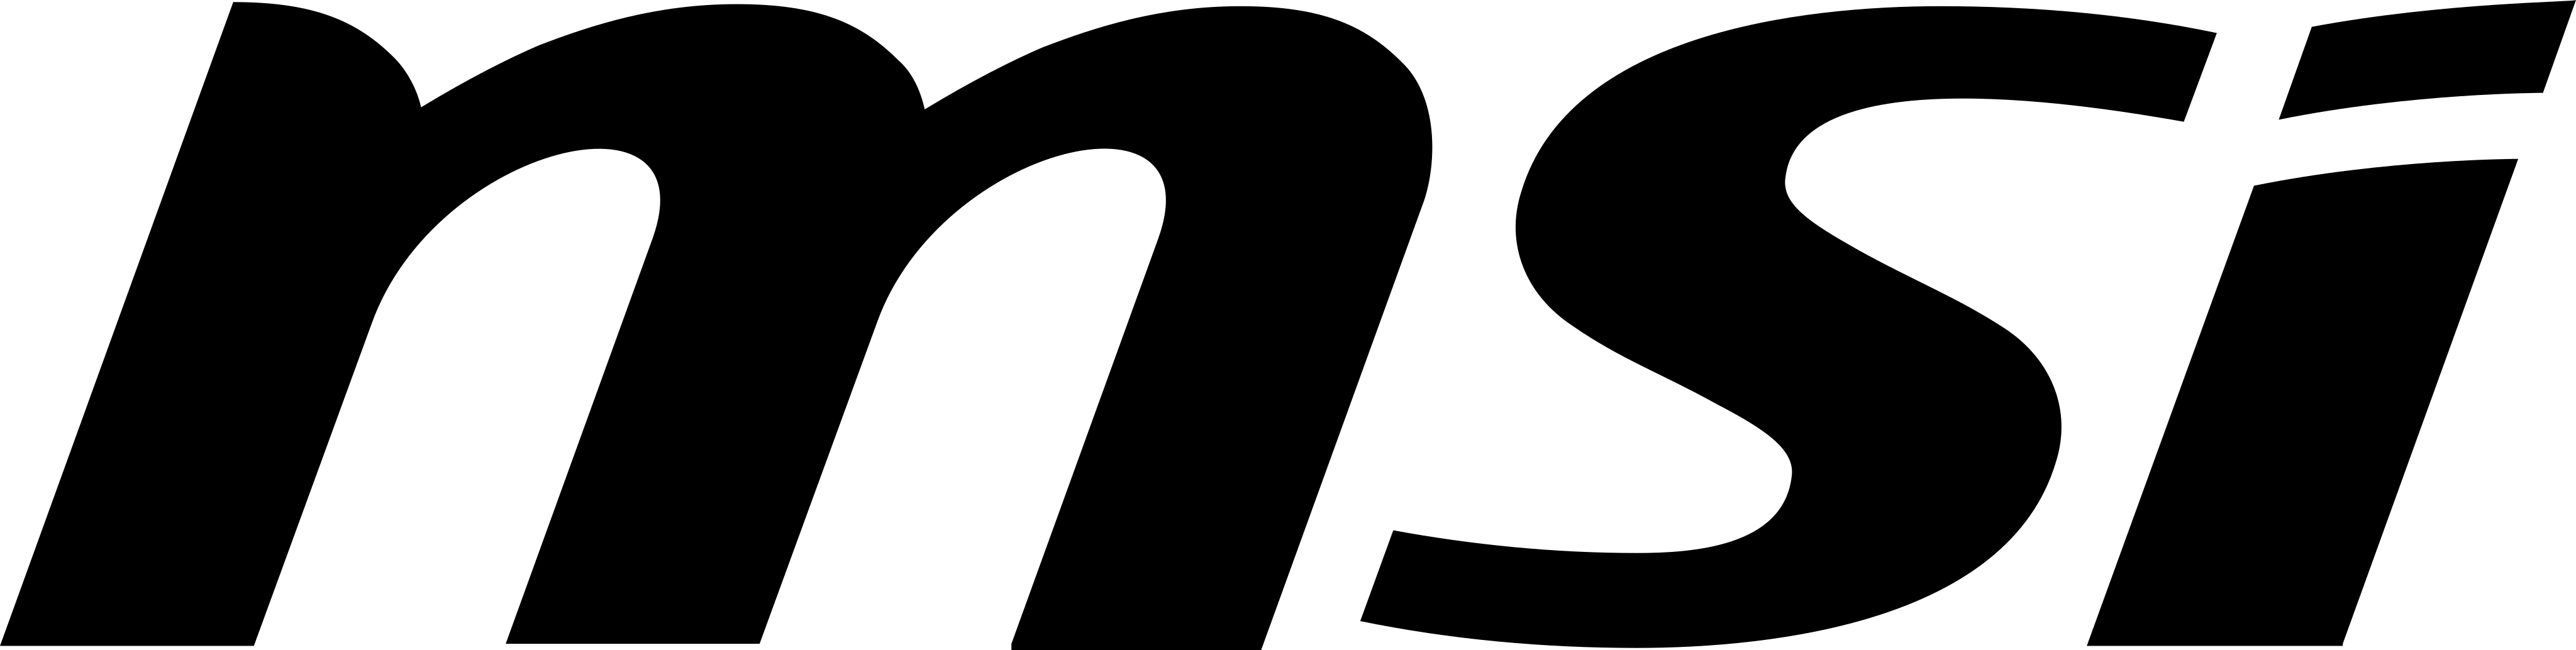 Msi Logo PNG - 176706